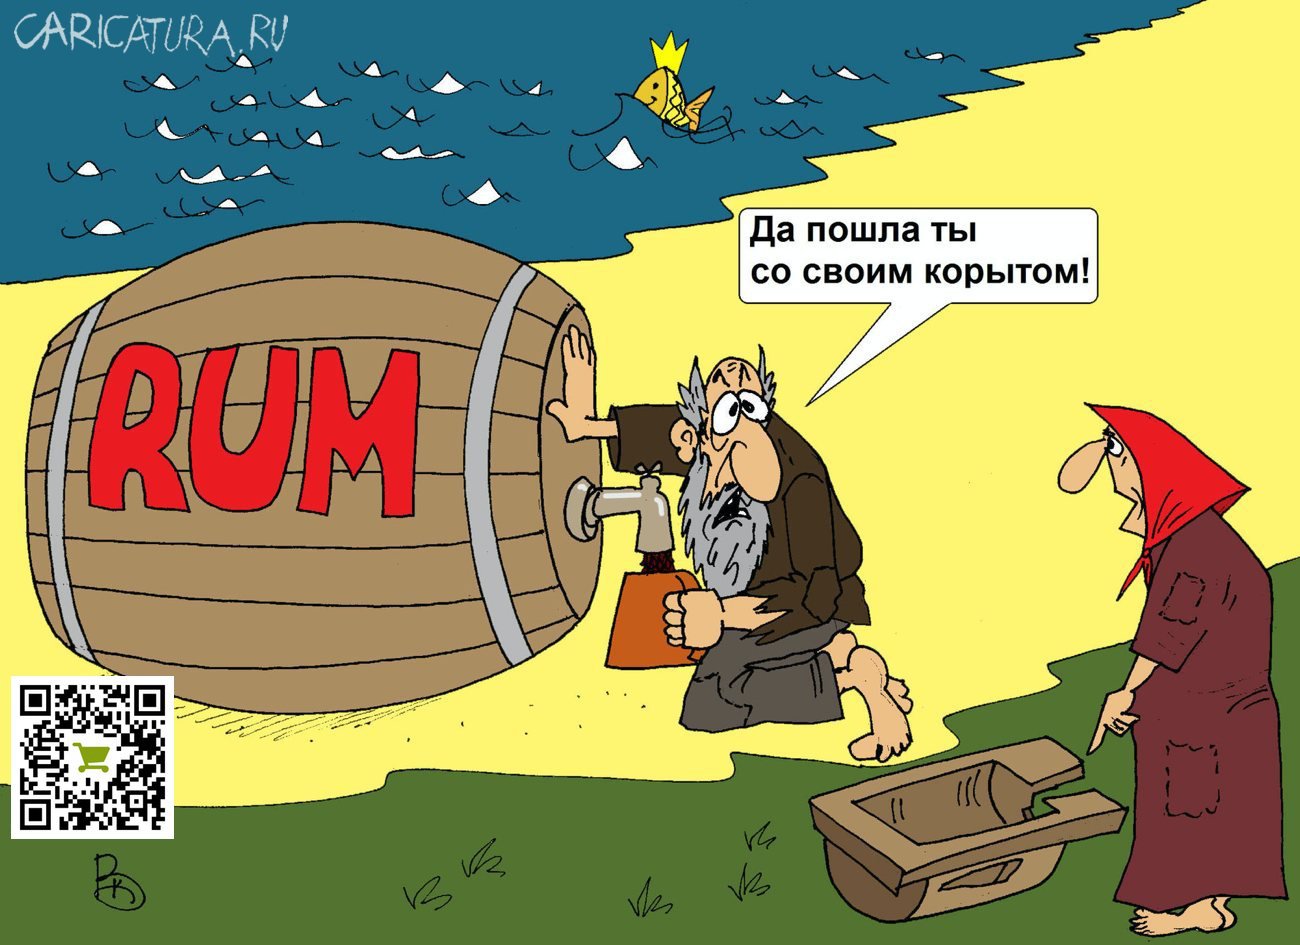 Карикатура "Бочка", Валерий Каненков